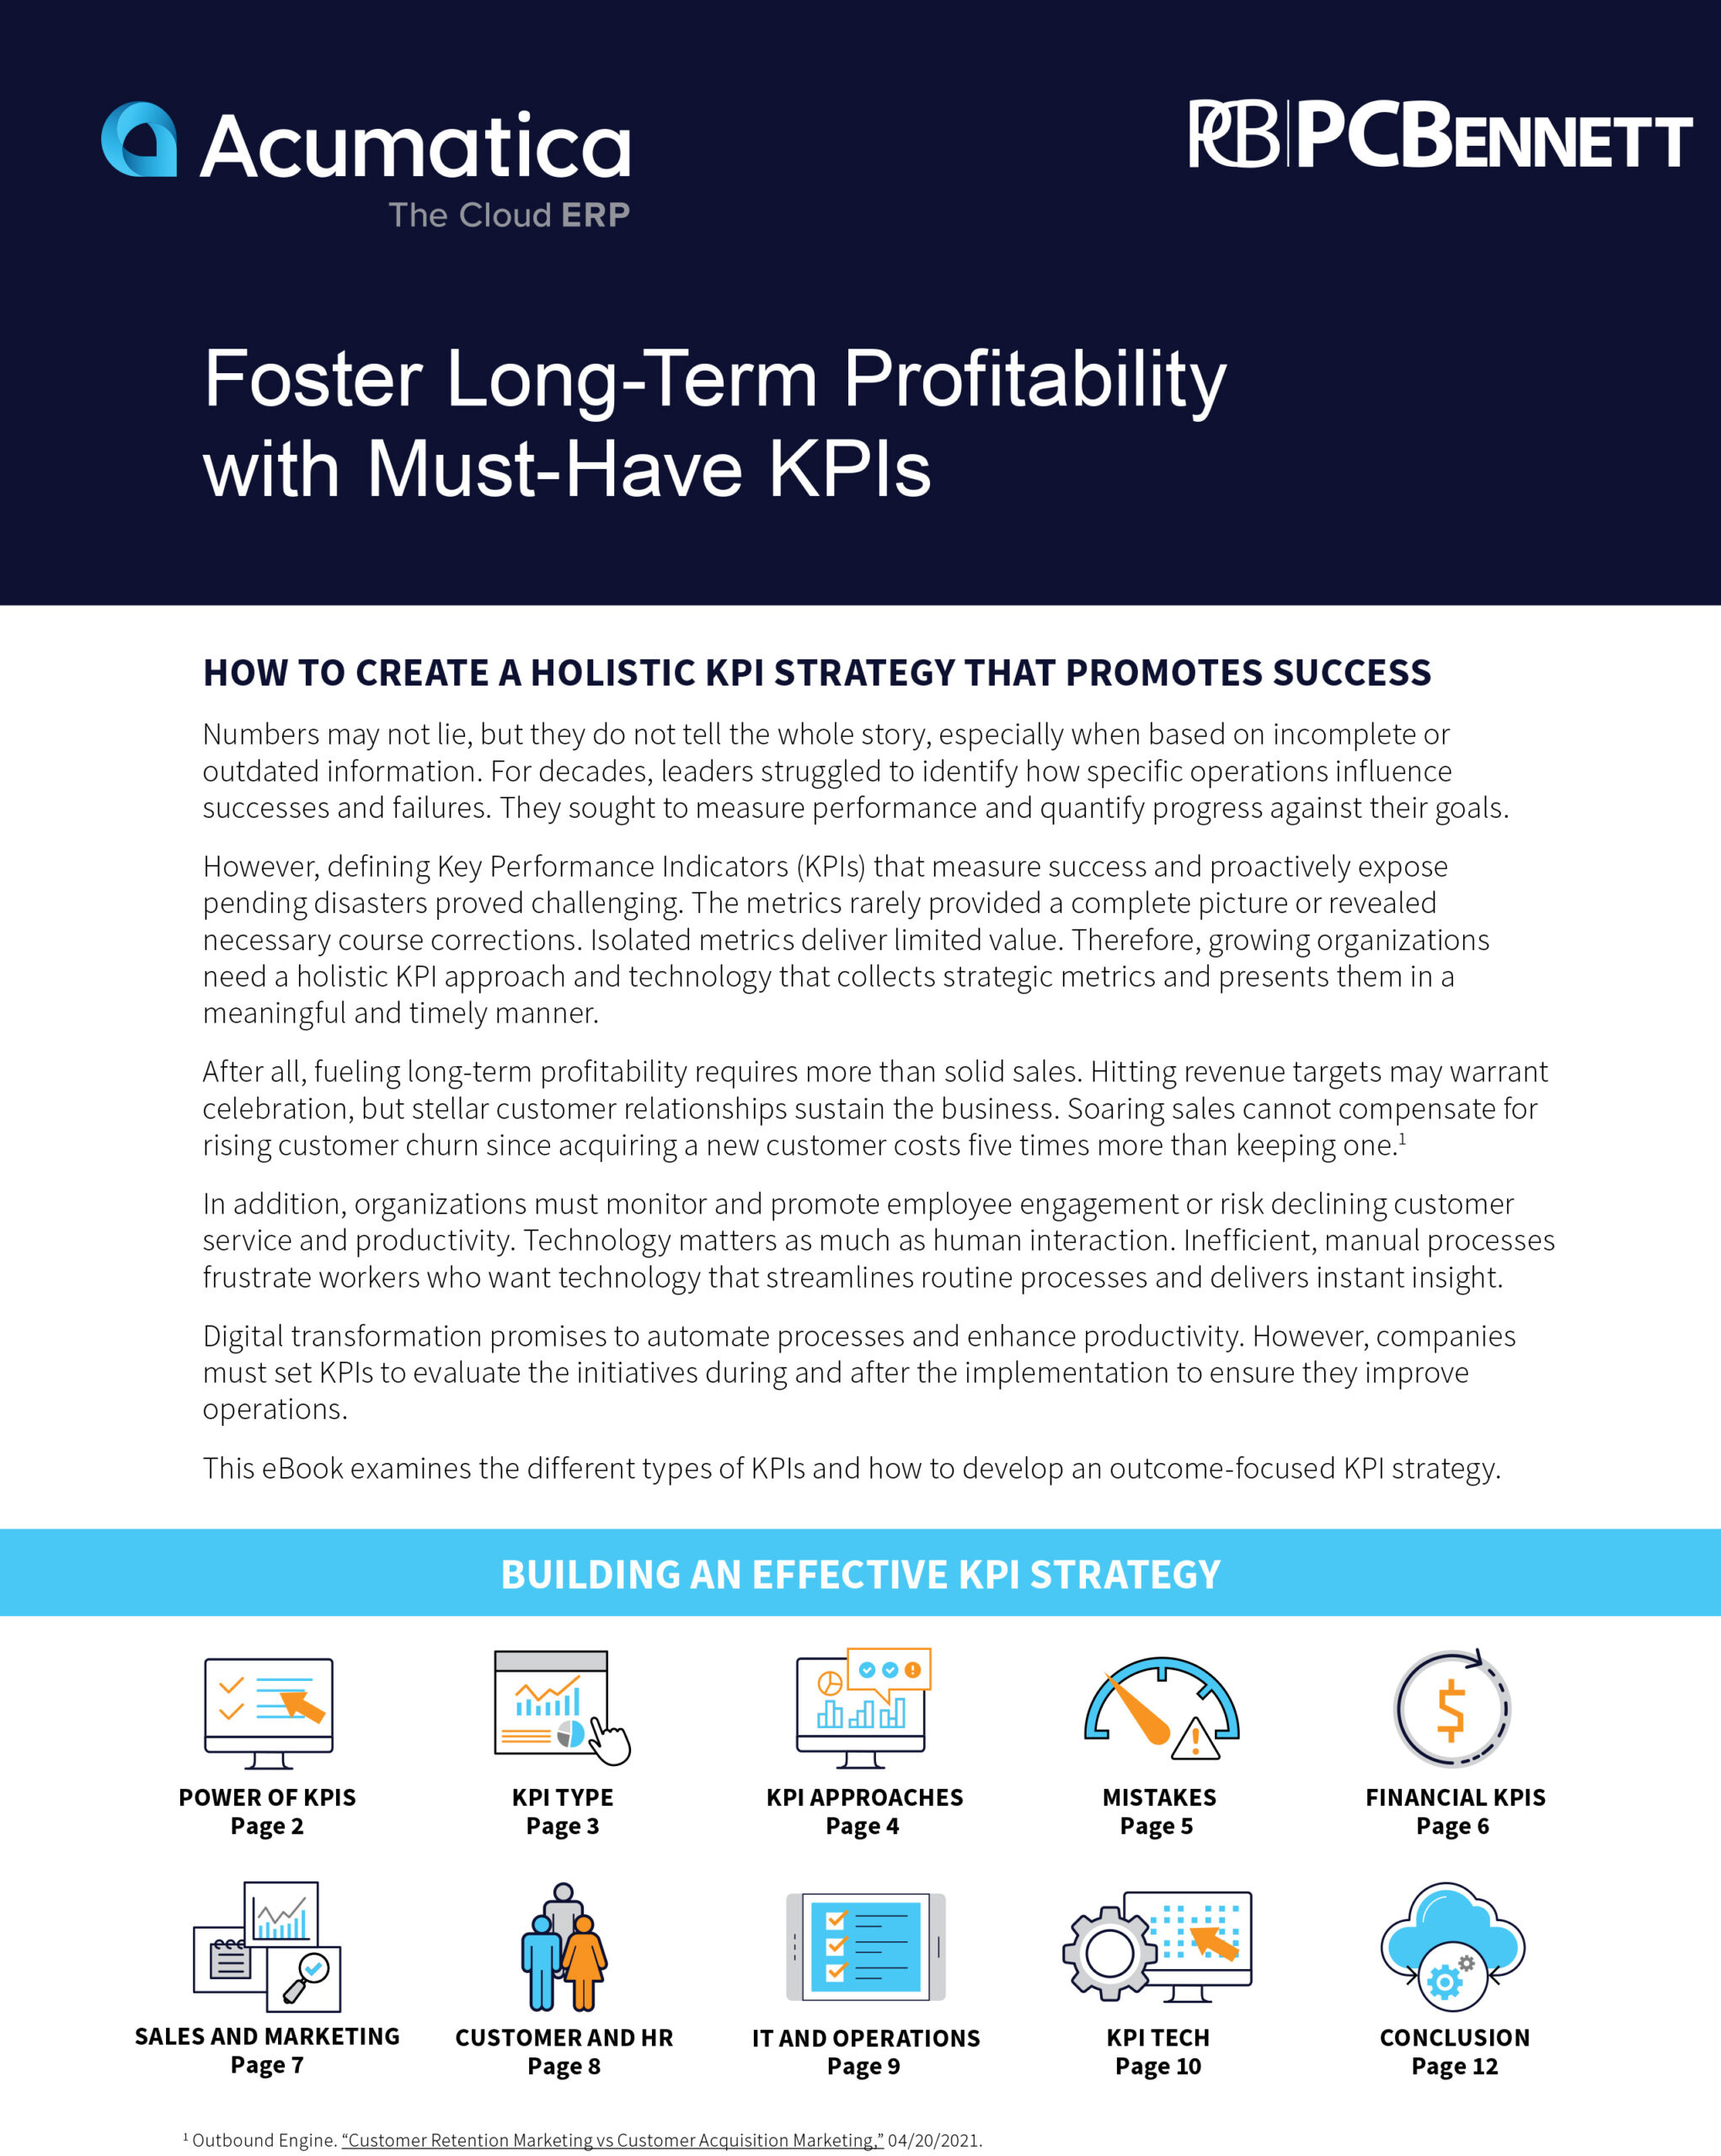 Foster Long Term Profitability With KPIs Metrics EB GB 20240229 1 scaled